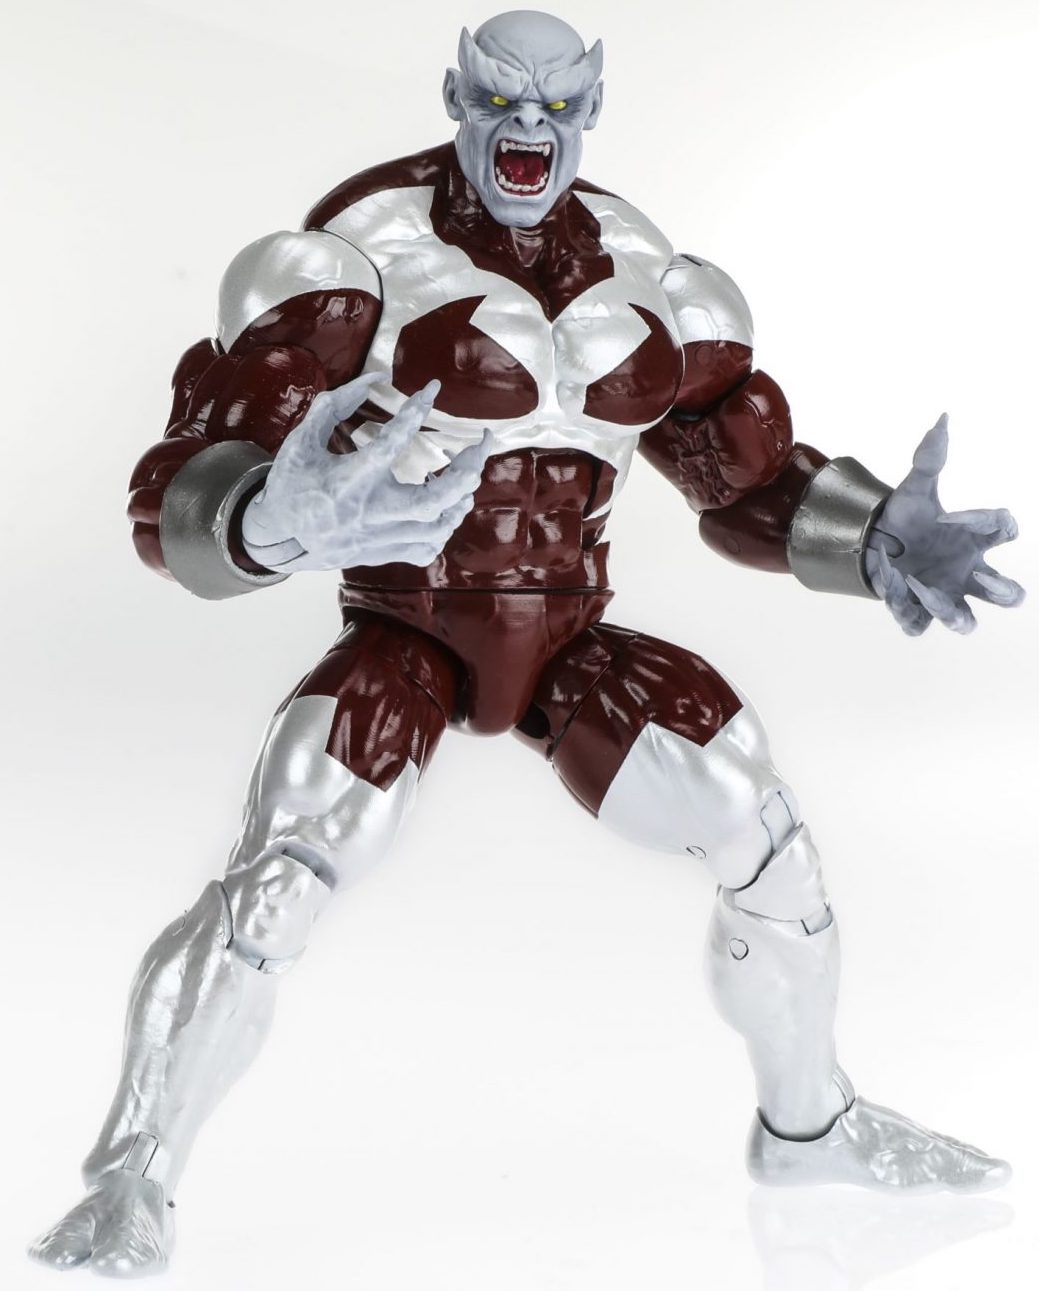 New X-Men Marvel Legends 6-Inch Skullbuster Action Figure by Hasbro BAF Caliban 